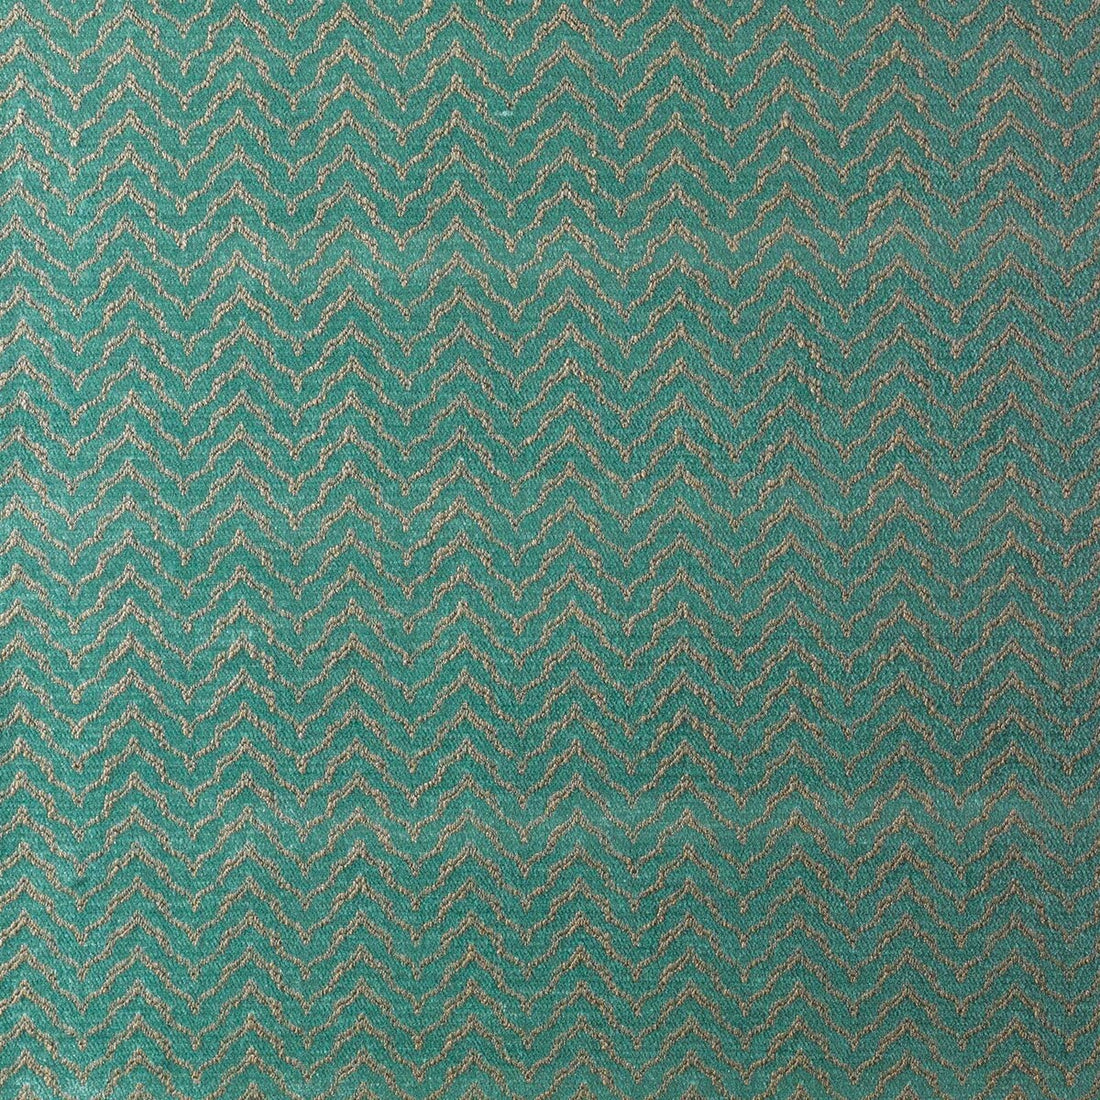 Sella fabric in agua color - pattern GDT5180.007.0 - by Gaston y Daniela in the Lorenzo Castillo II collection